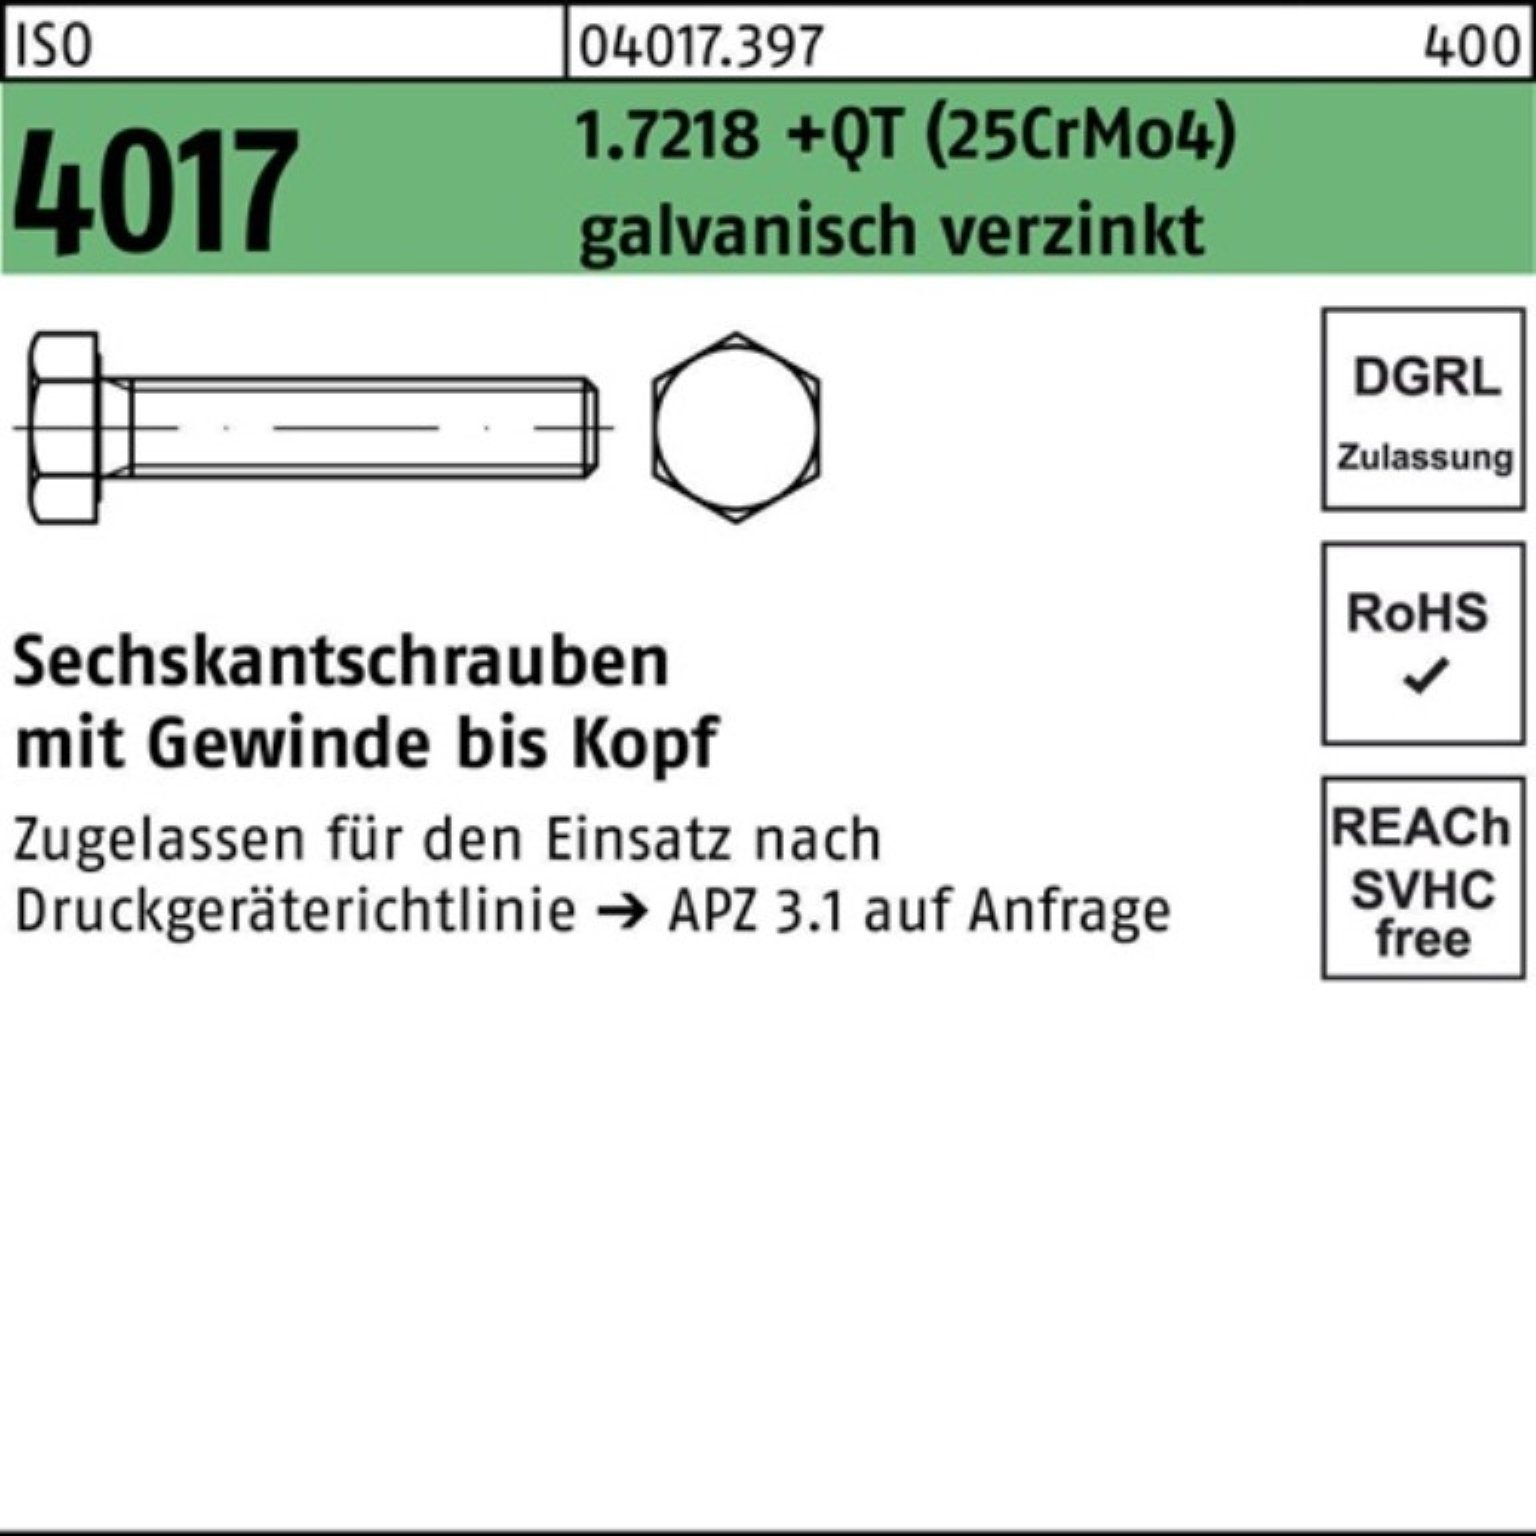 Sechskantschraube g Bufab ISO Pack +QT VG 100er 4017 Sechskantschraube 1.7218 (25CrMo4) M30x90